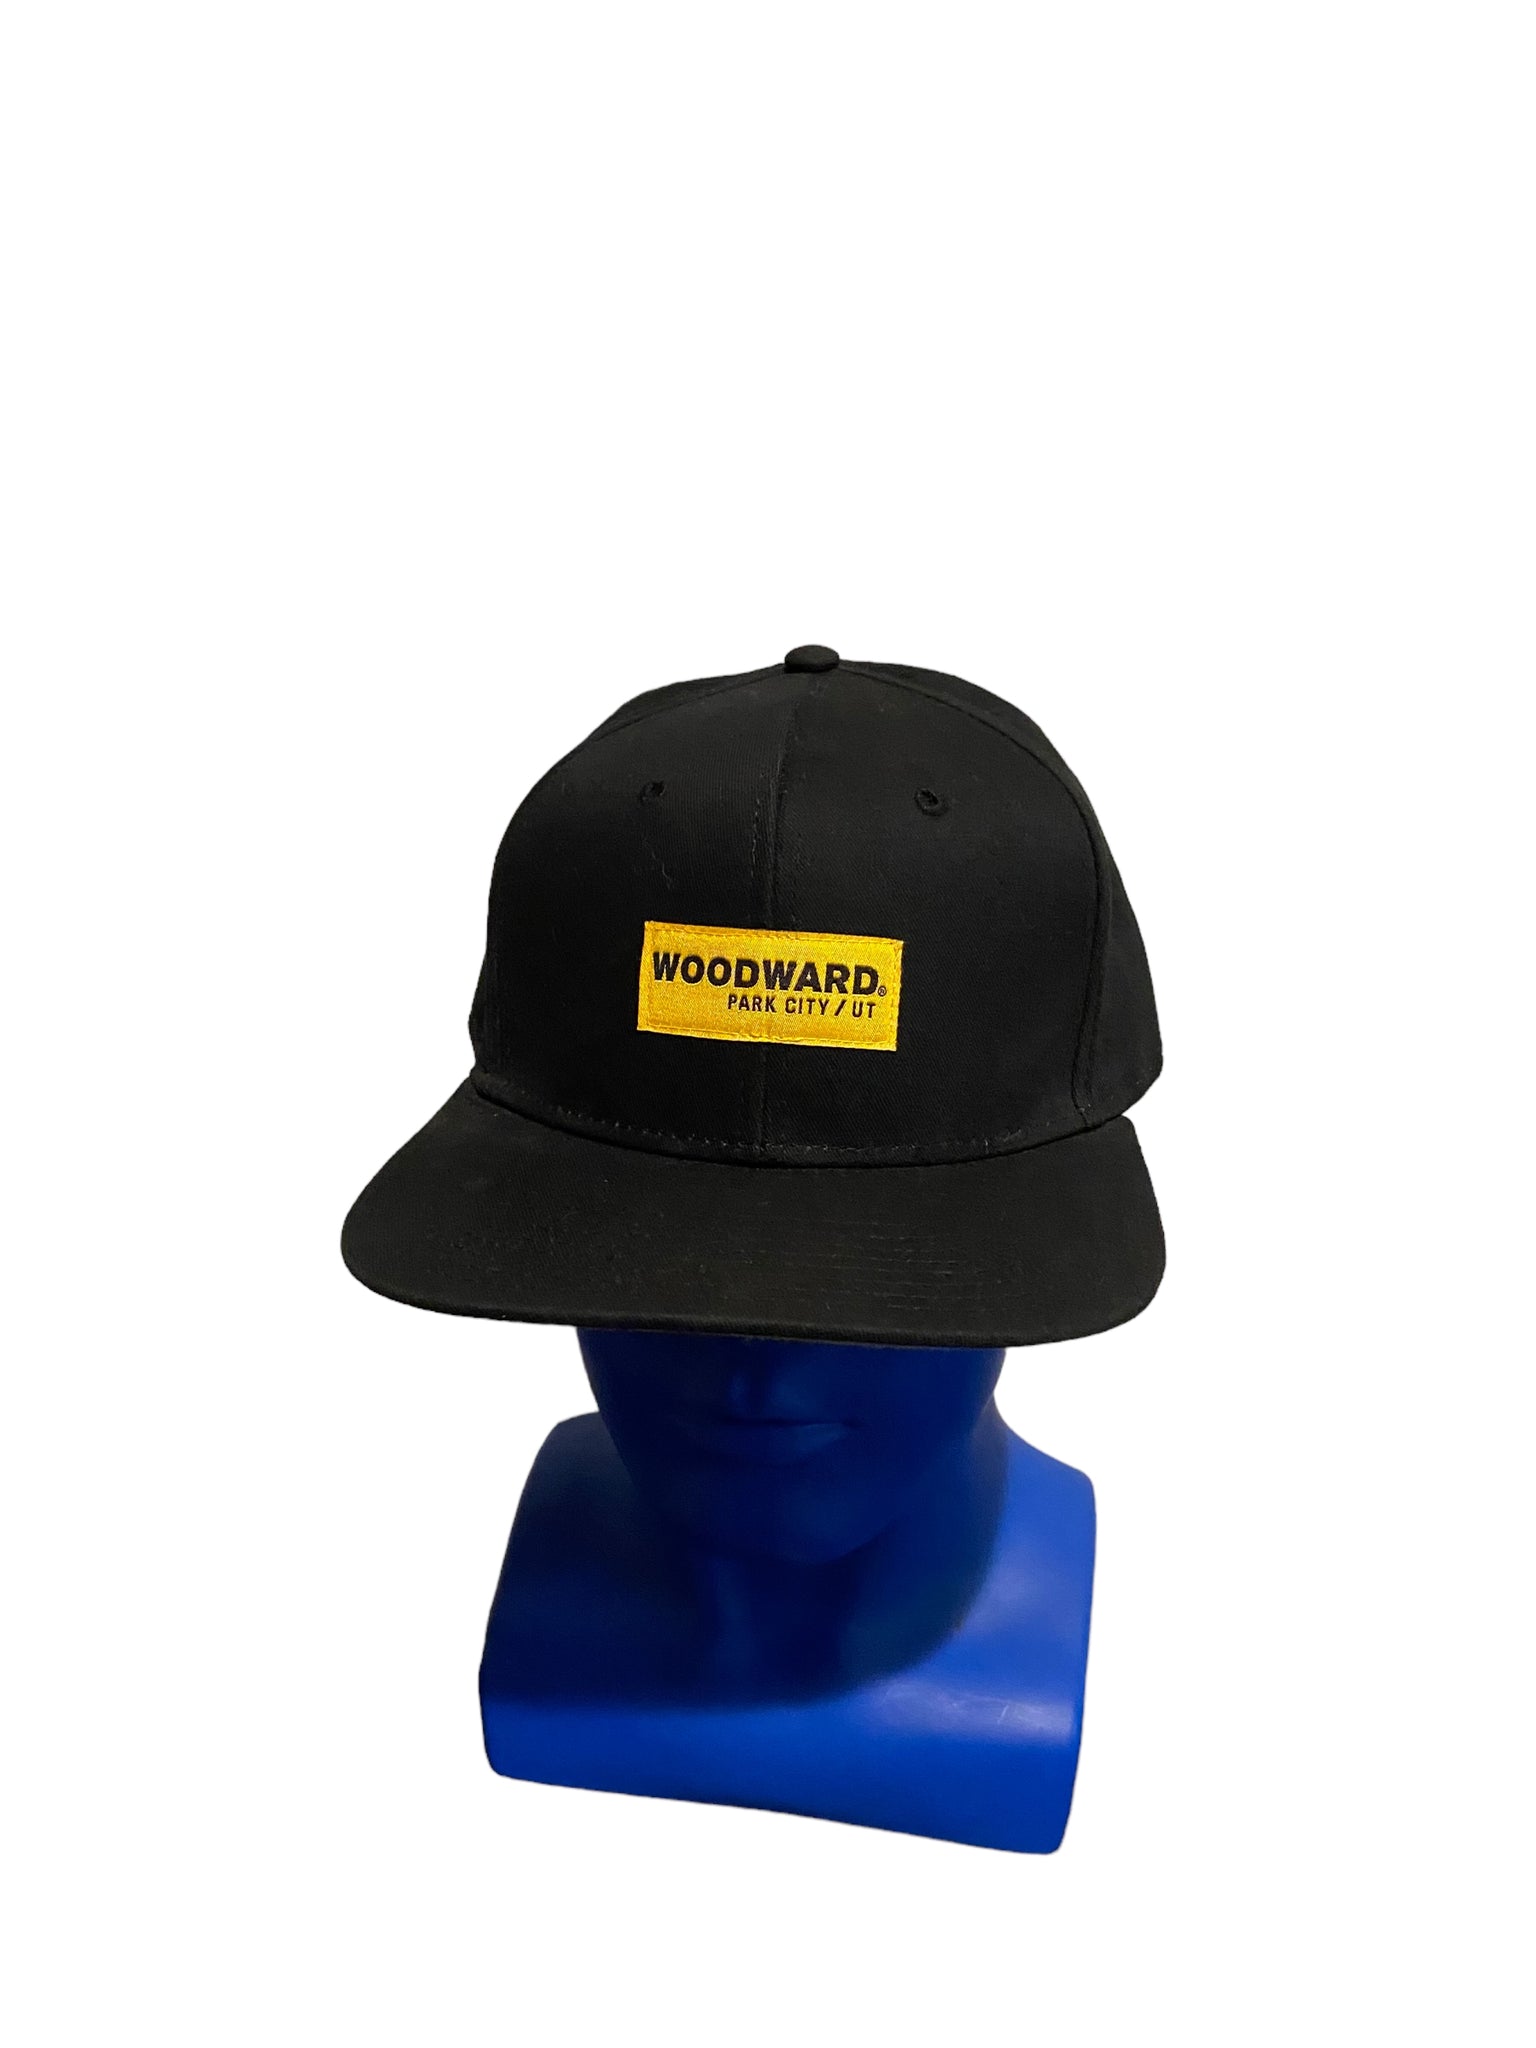 woodward park city/ ut yellow box logo black hat snapback